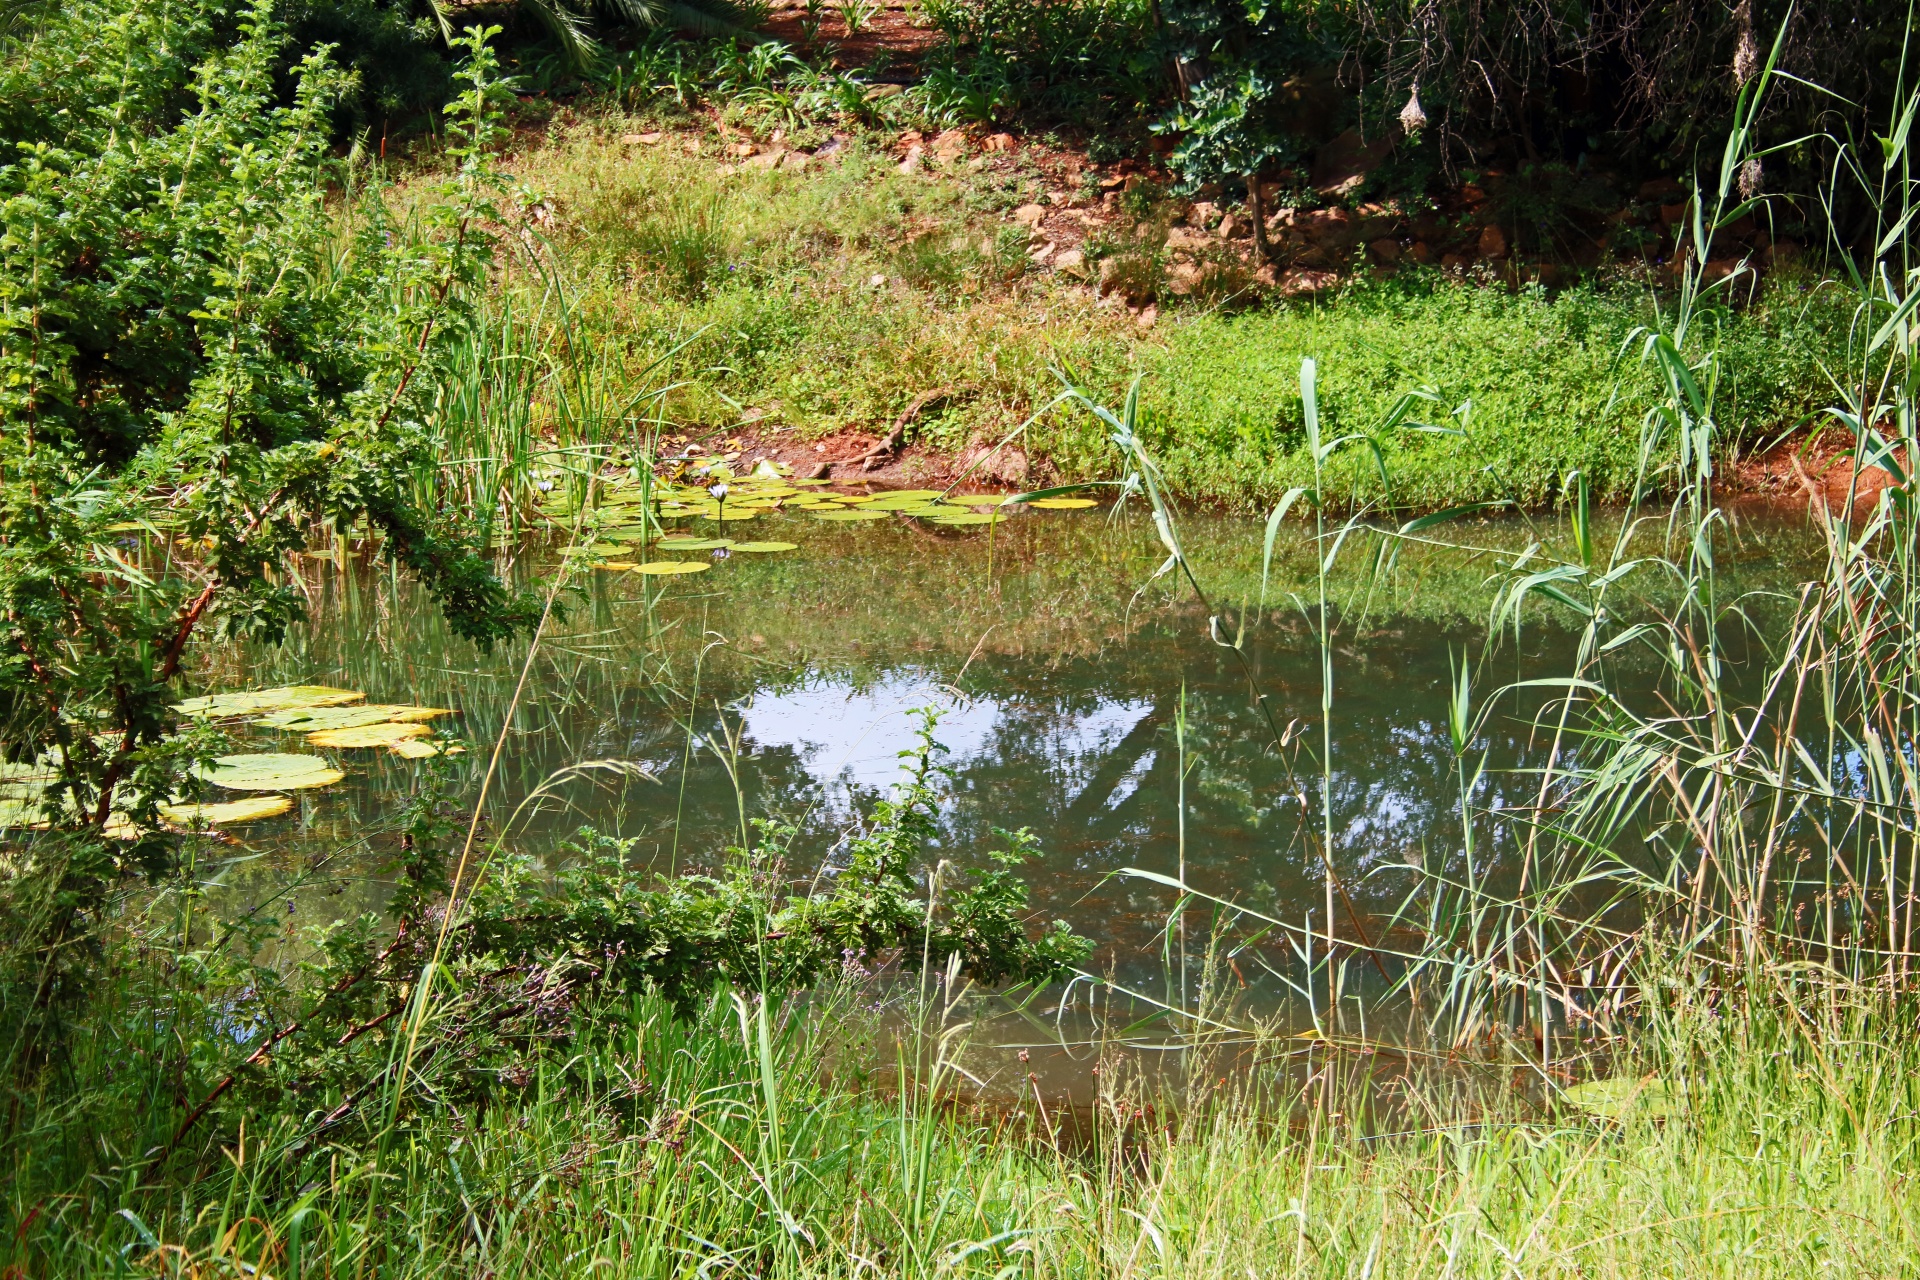 Mini wildlife pond with surrounding greenery